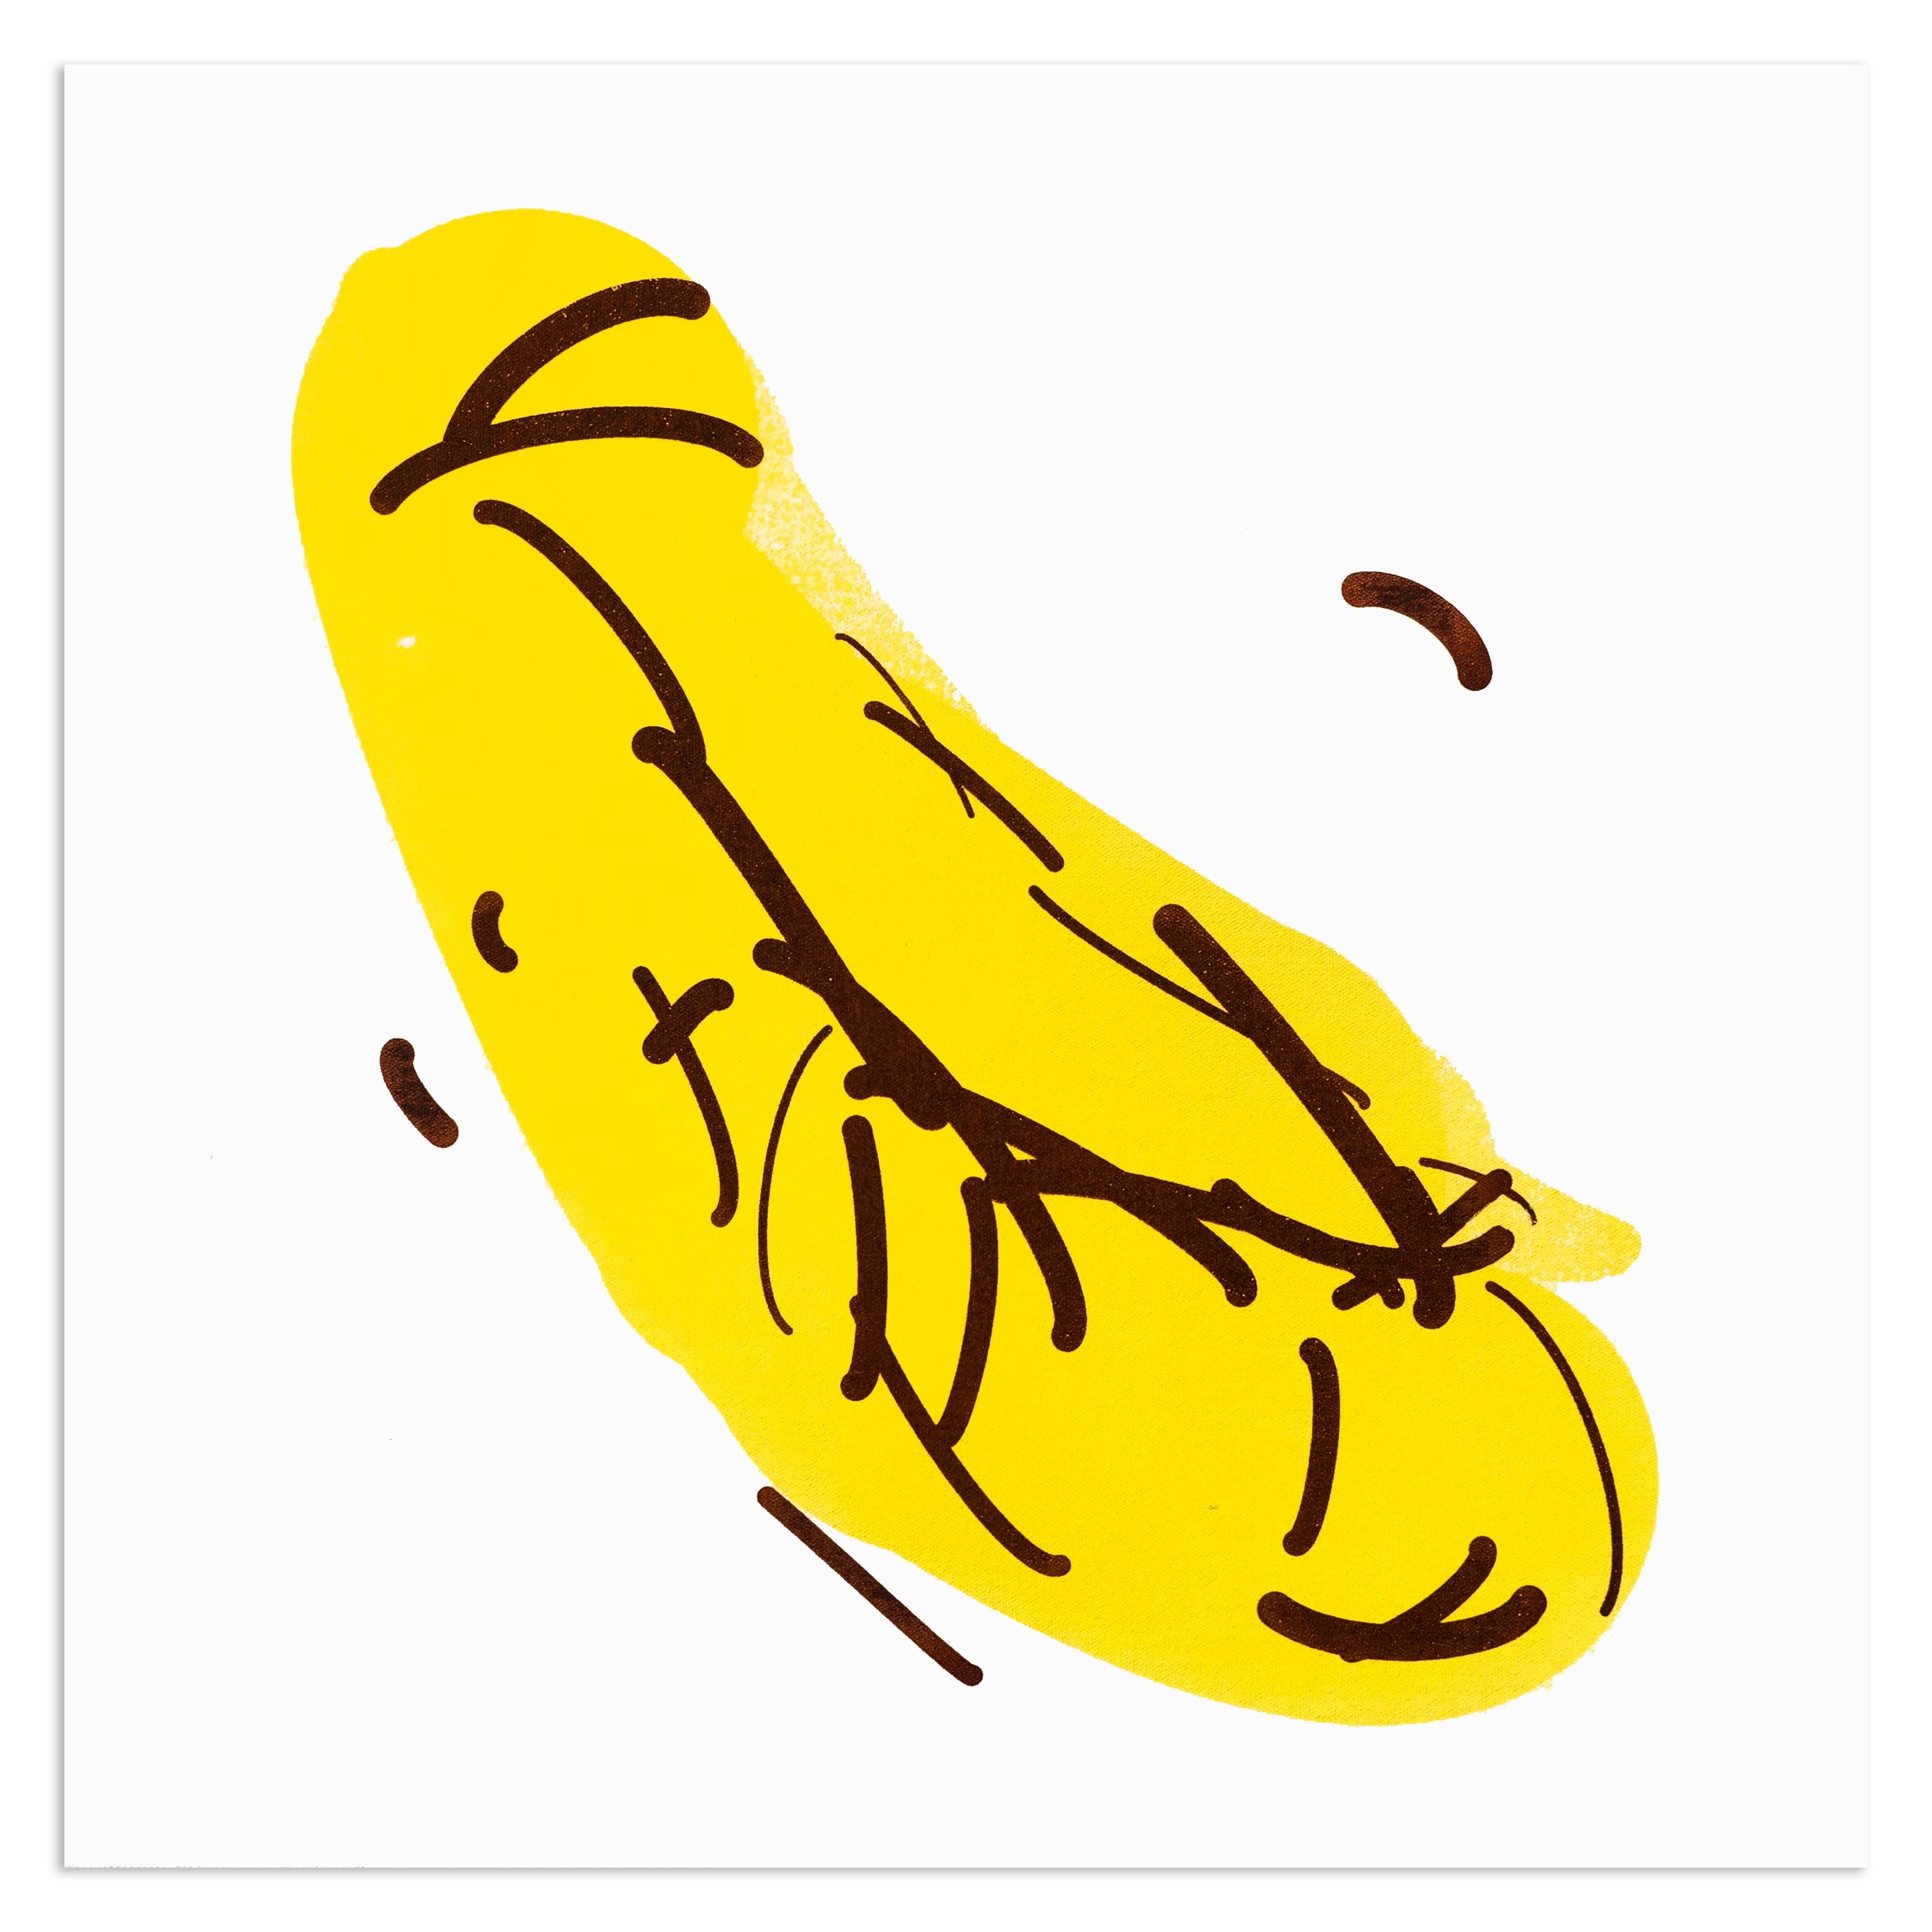 Banana - Art by Tom White